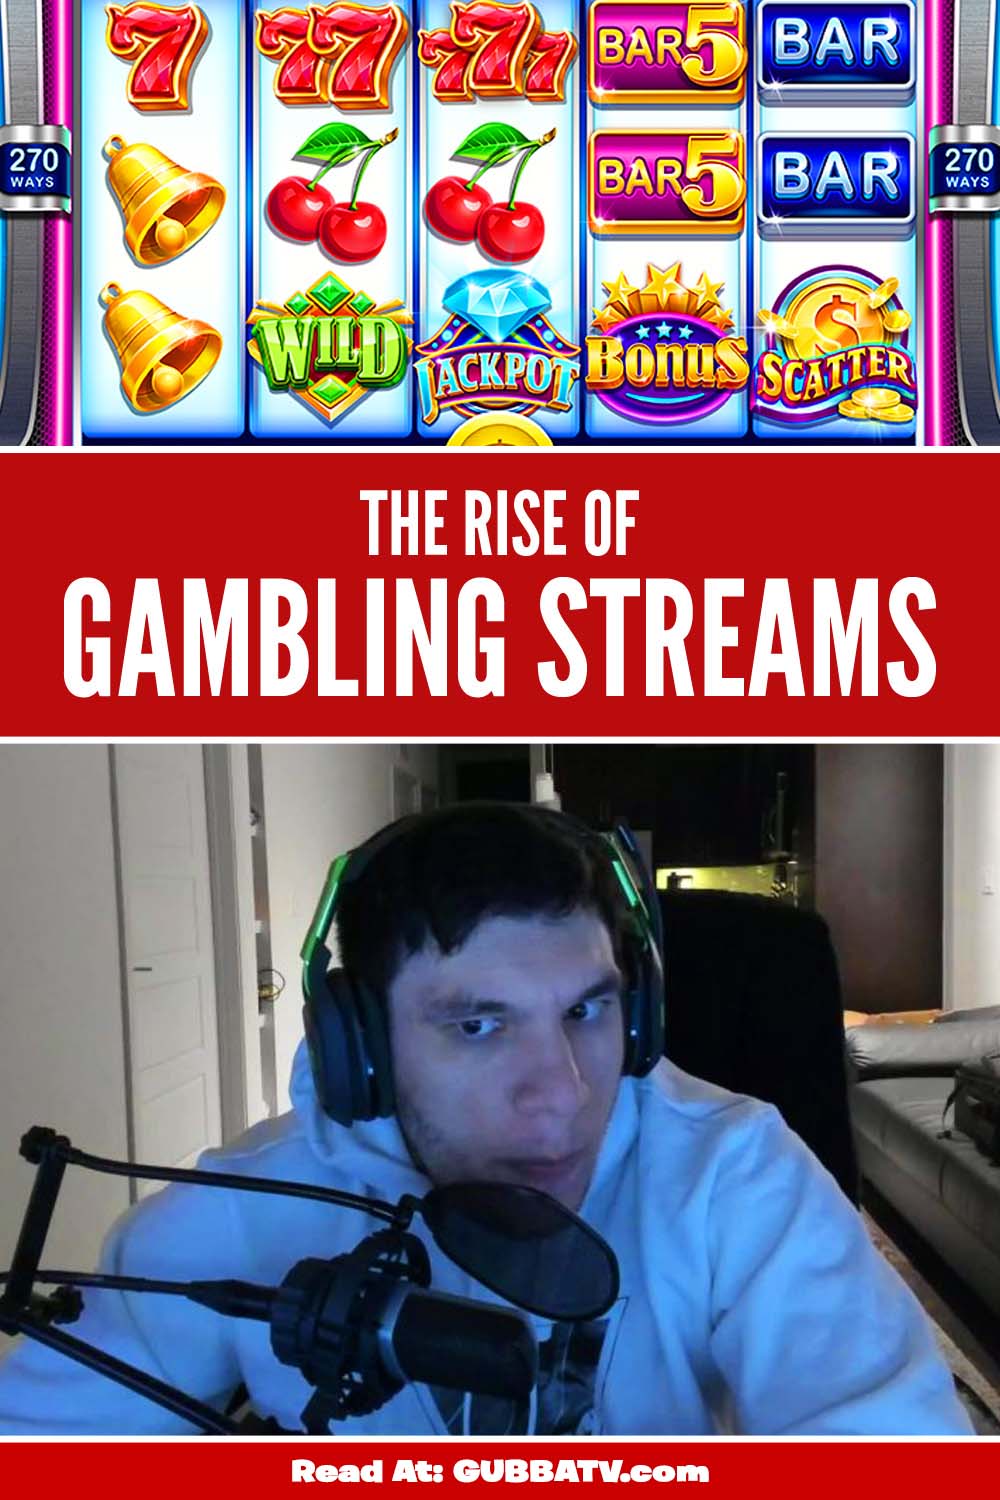 The Rise of Gambling Streams